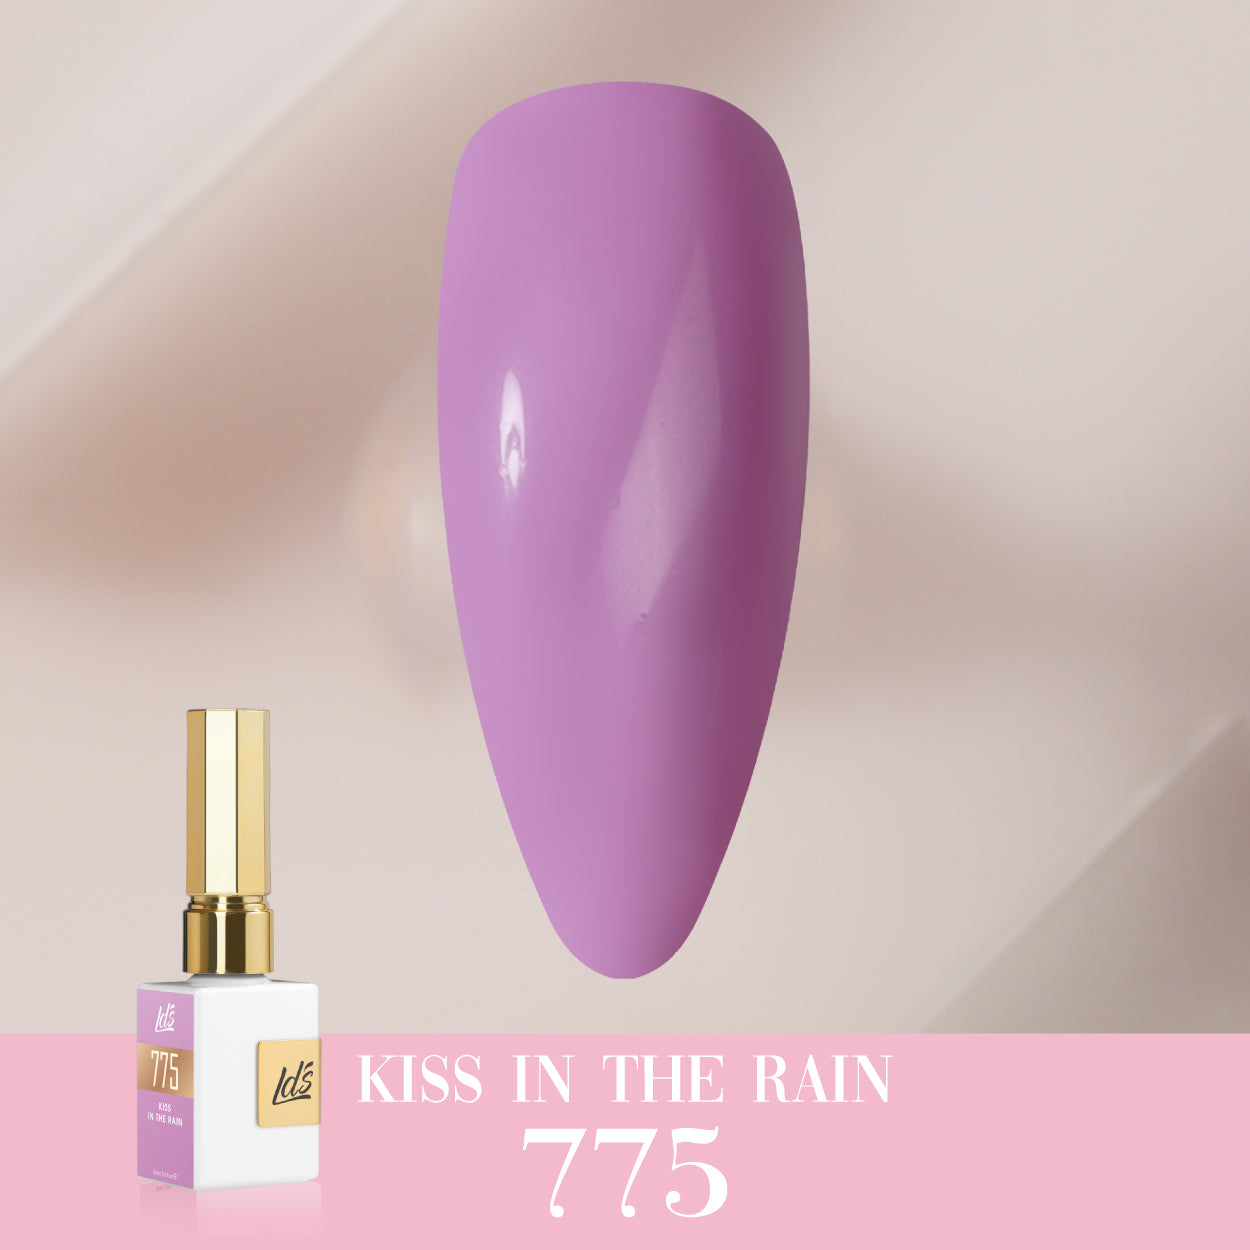 LDS Color Craze Collection - 775 Kiss in the Rain - Gel Polish 0.5oz